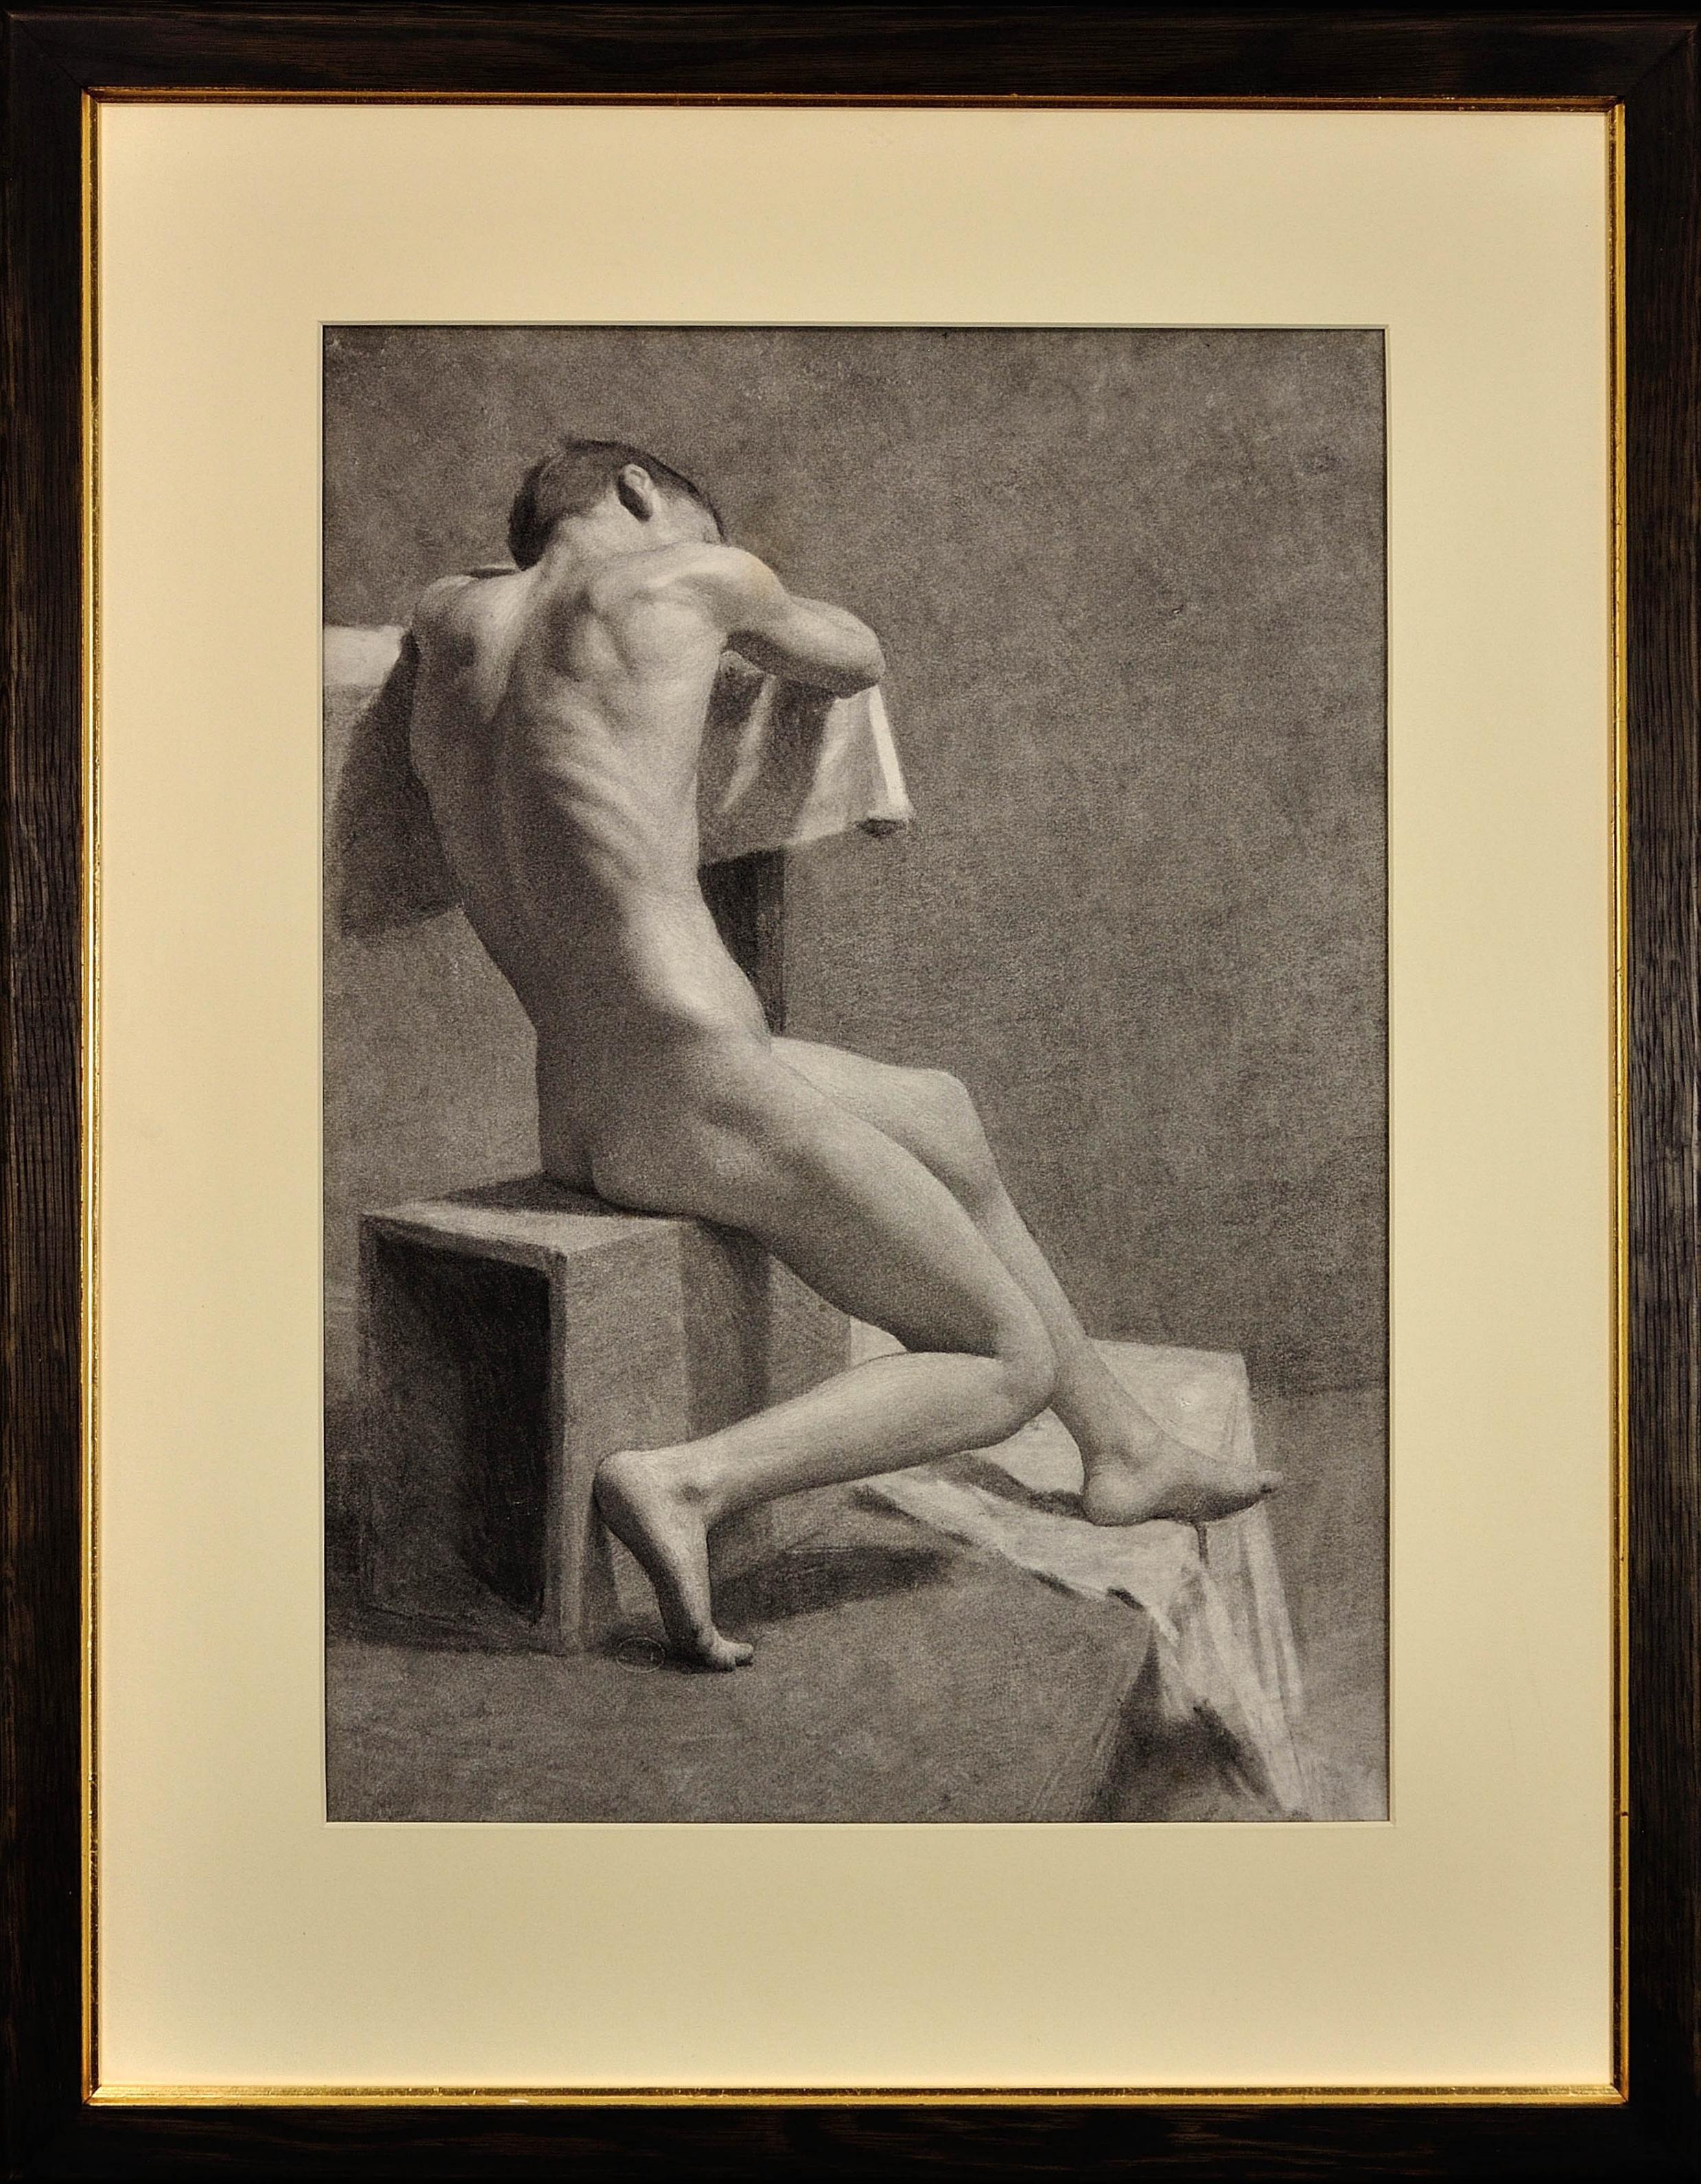 Harold Knight Portrait - Male Nude Life Model, Nottingham School of Art 1895.Victorian Life Drawing Class